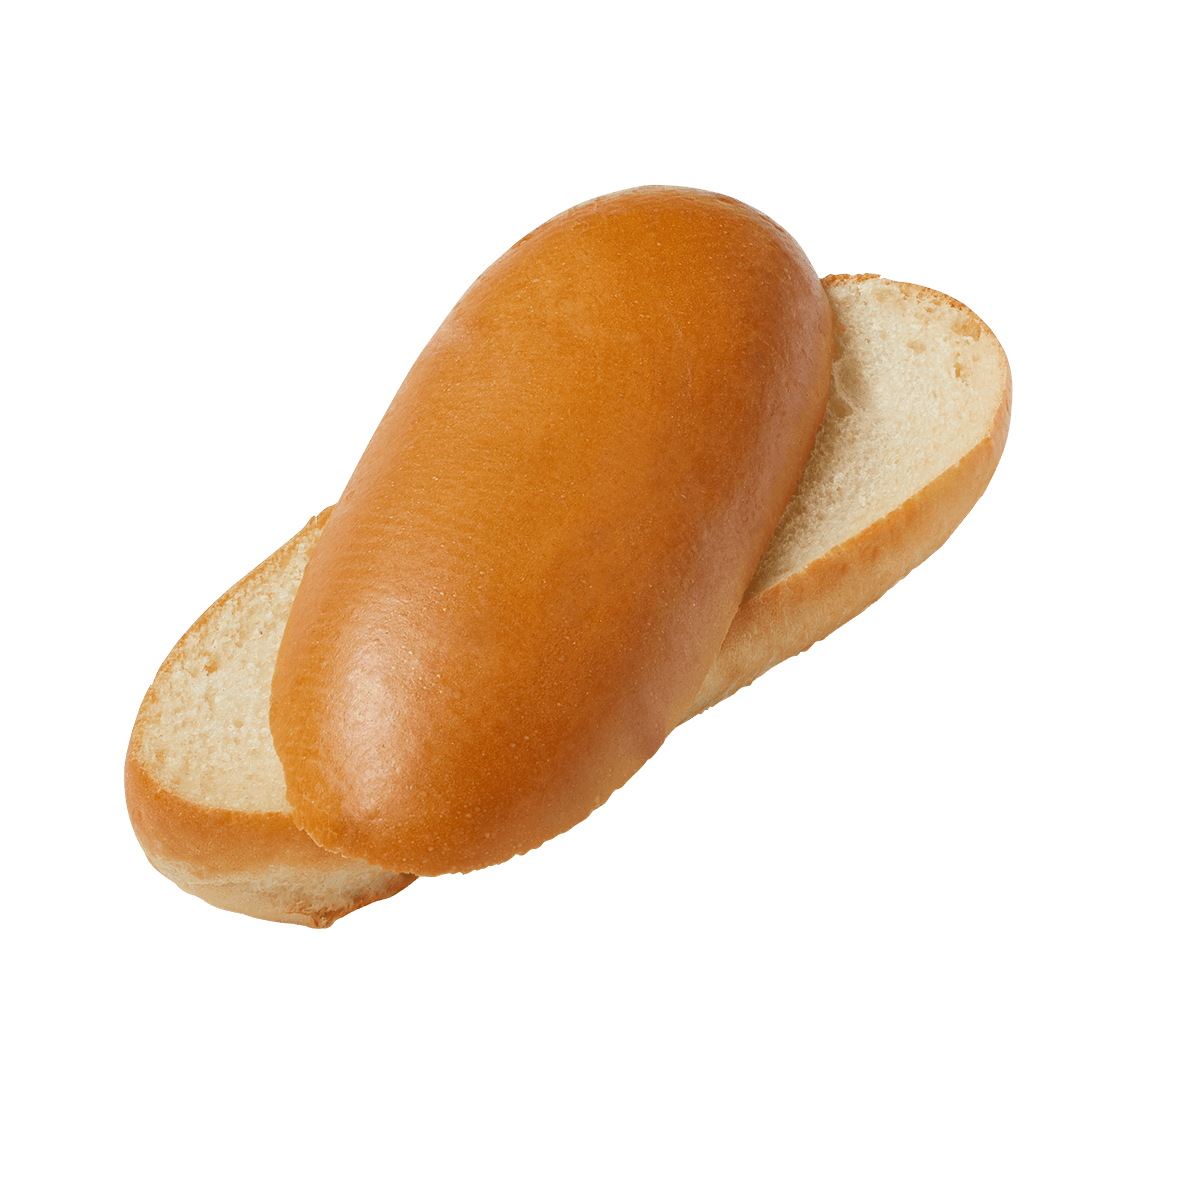 Brioche style hot dog bun side view sliced